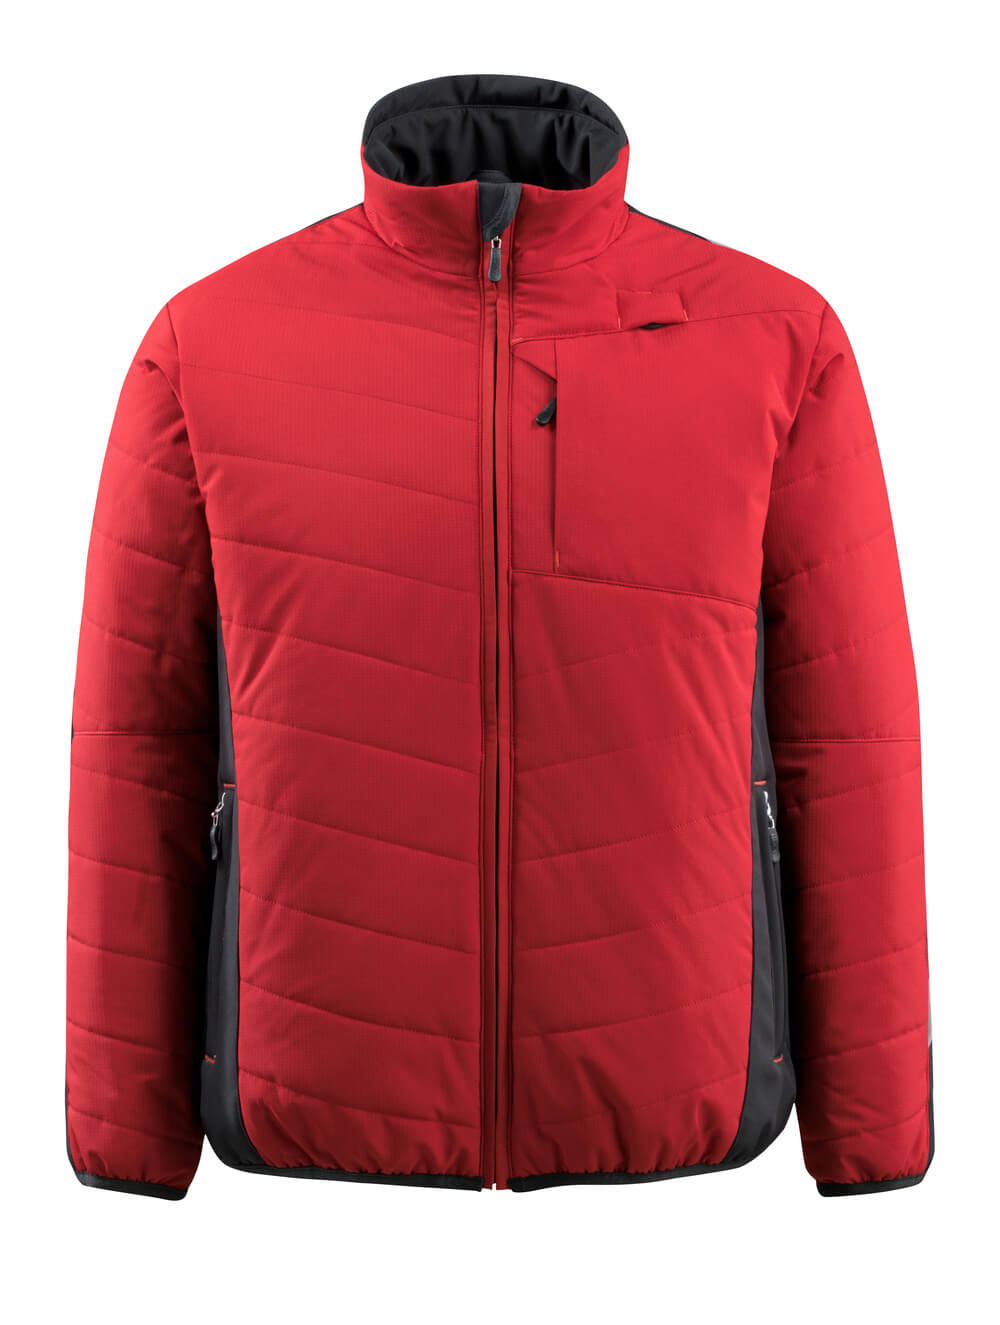 Mascot UNIQUE  Erding Thermal jacket 15615 red/black